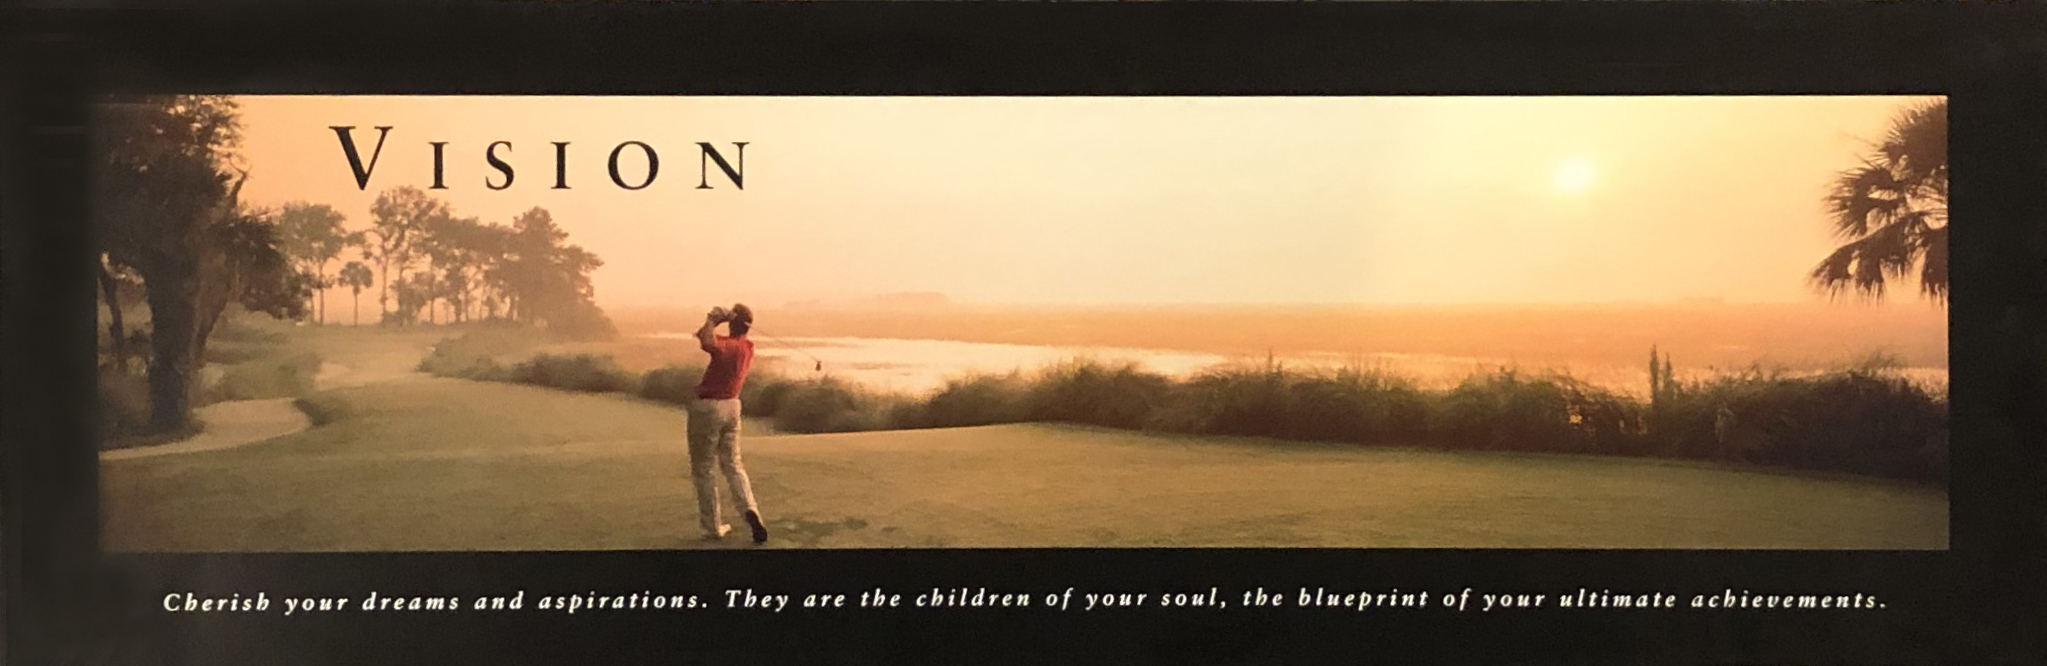 Vision - Golf